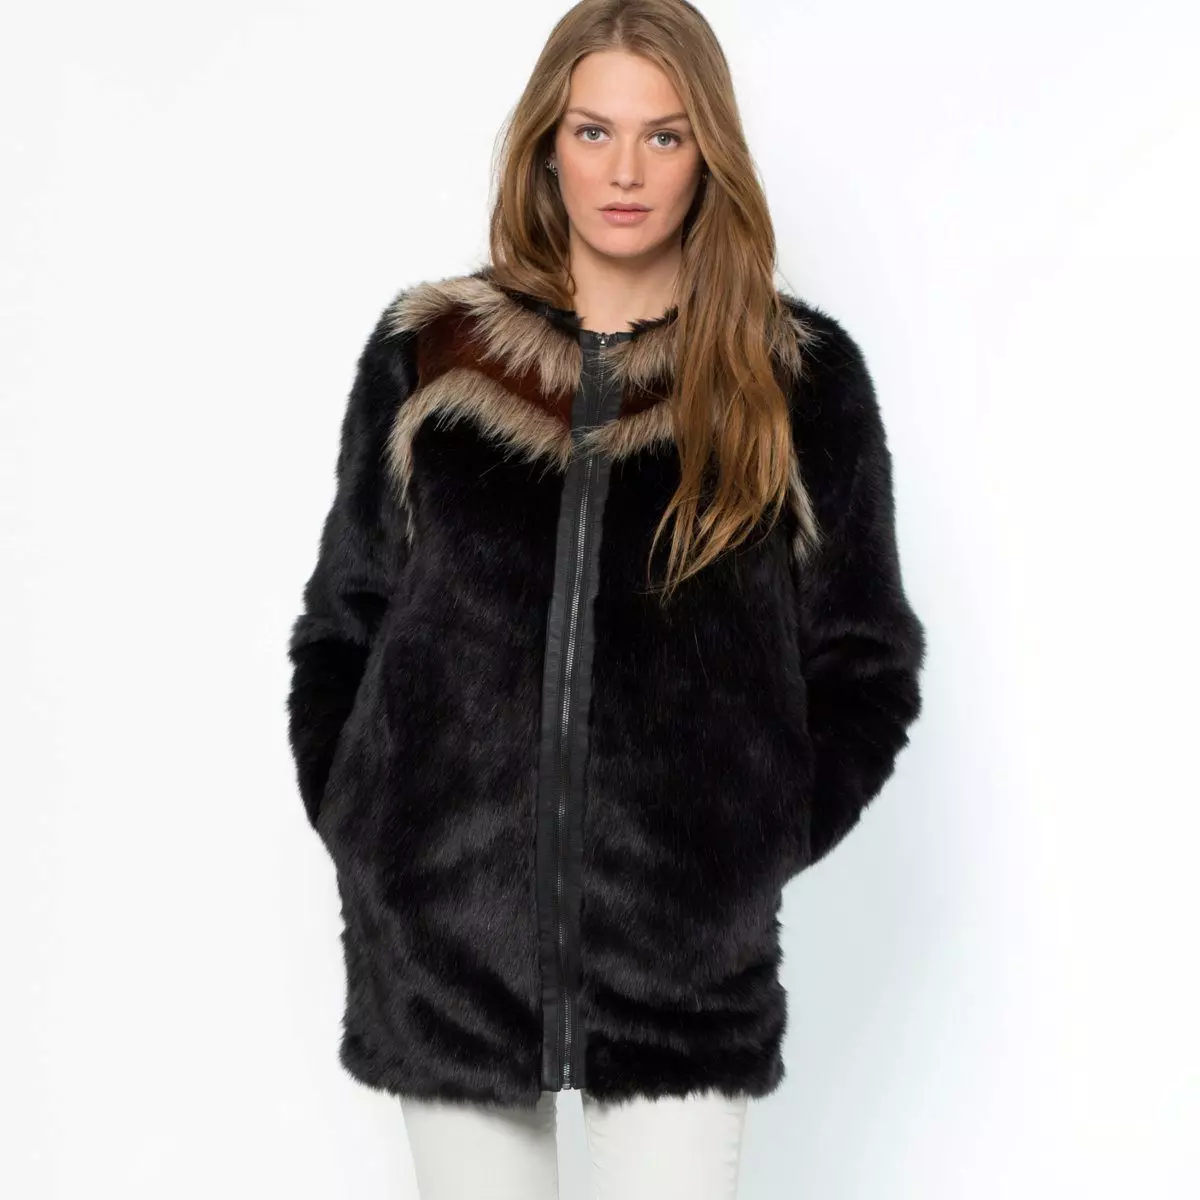 Пальто зі штучного хутра (78 фото): з каракулю, з капюшоном, плюшеве, жіночі моделі пальто 621_9